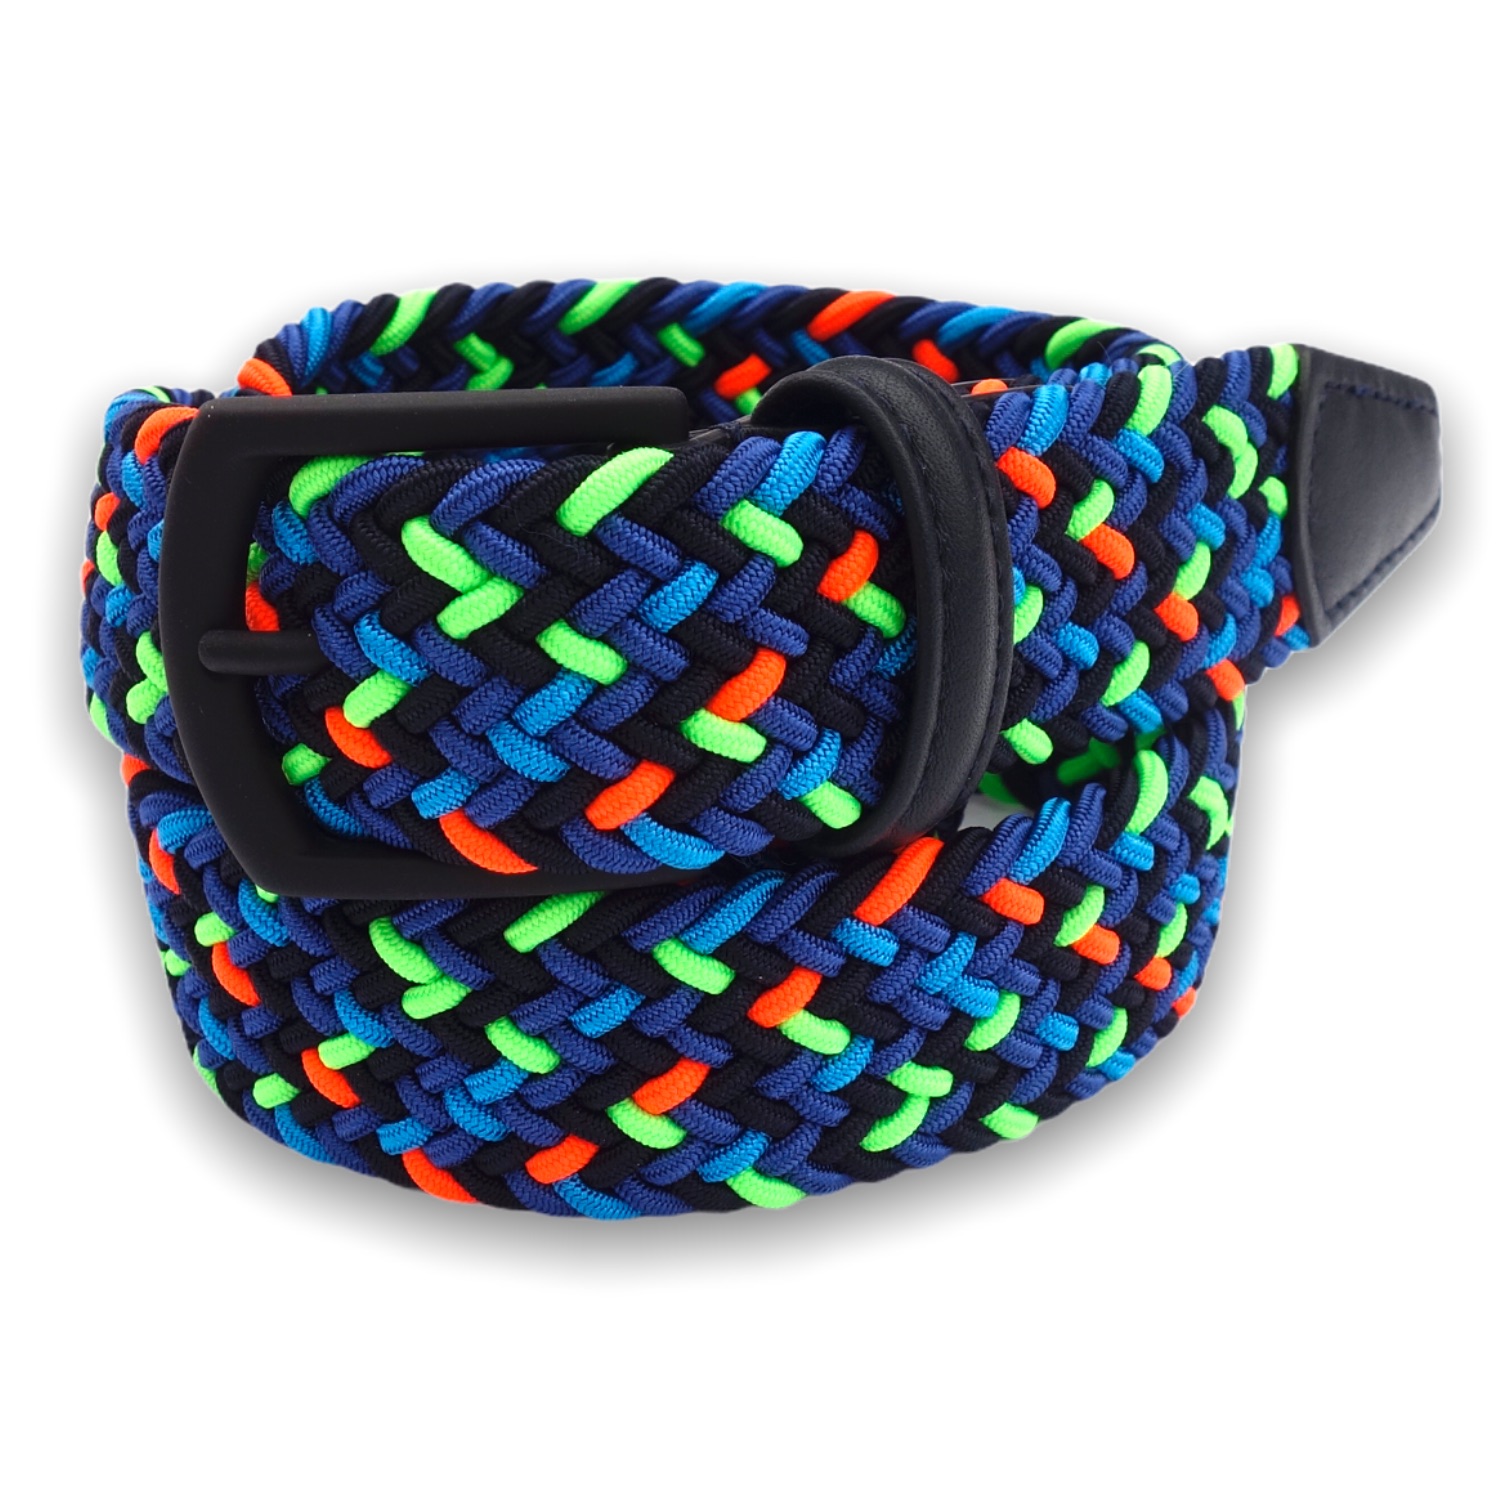 Anderson's light blue braided elastic belt - Floccari Store